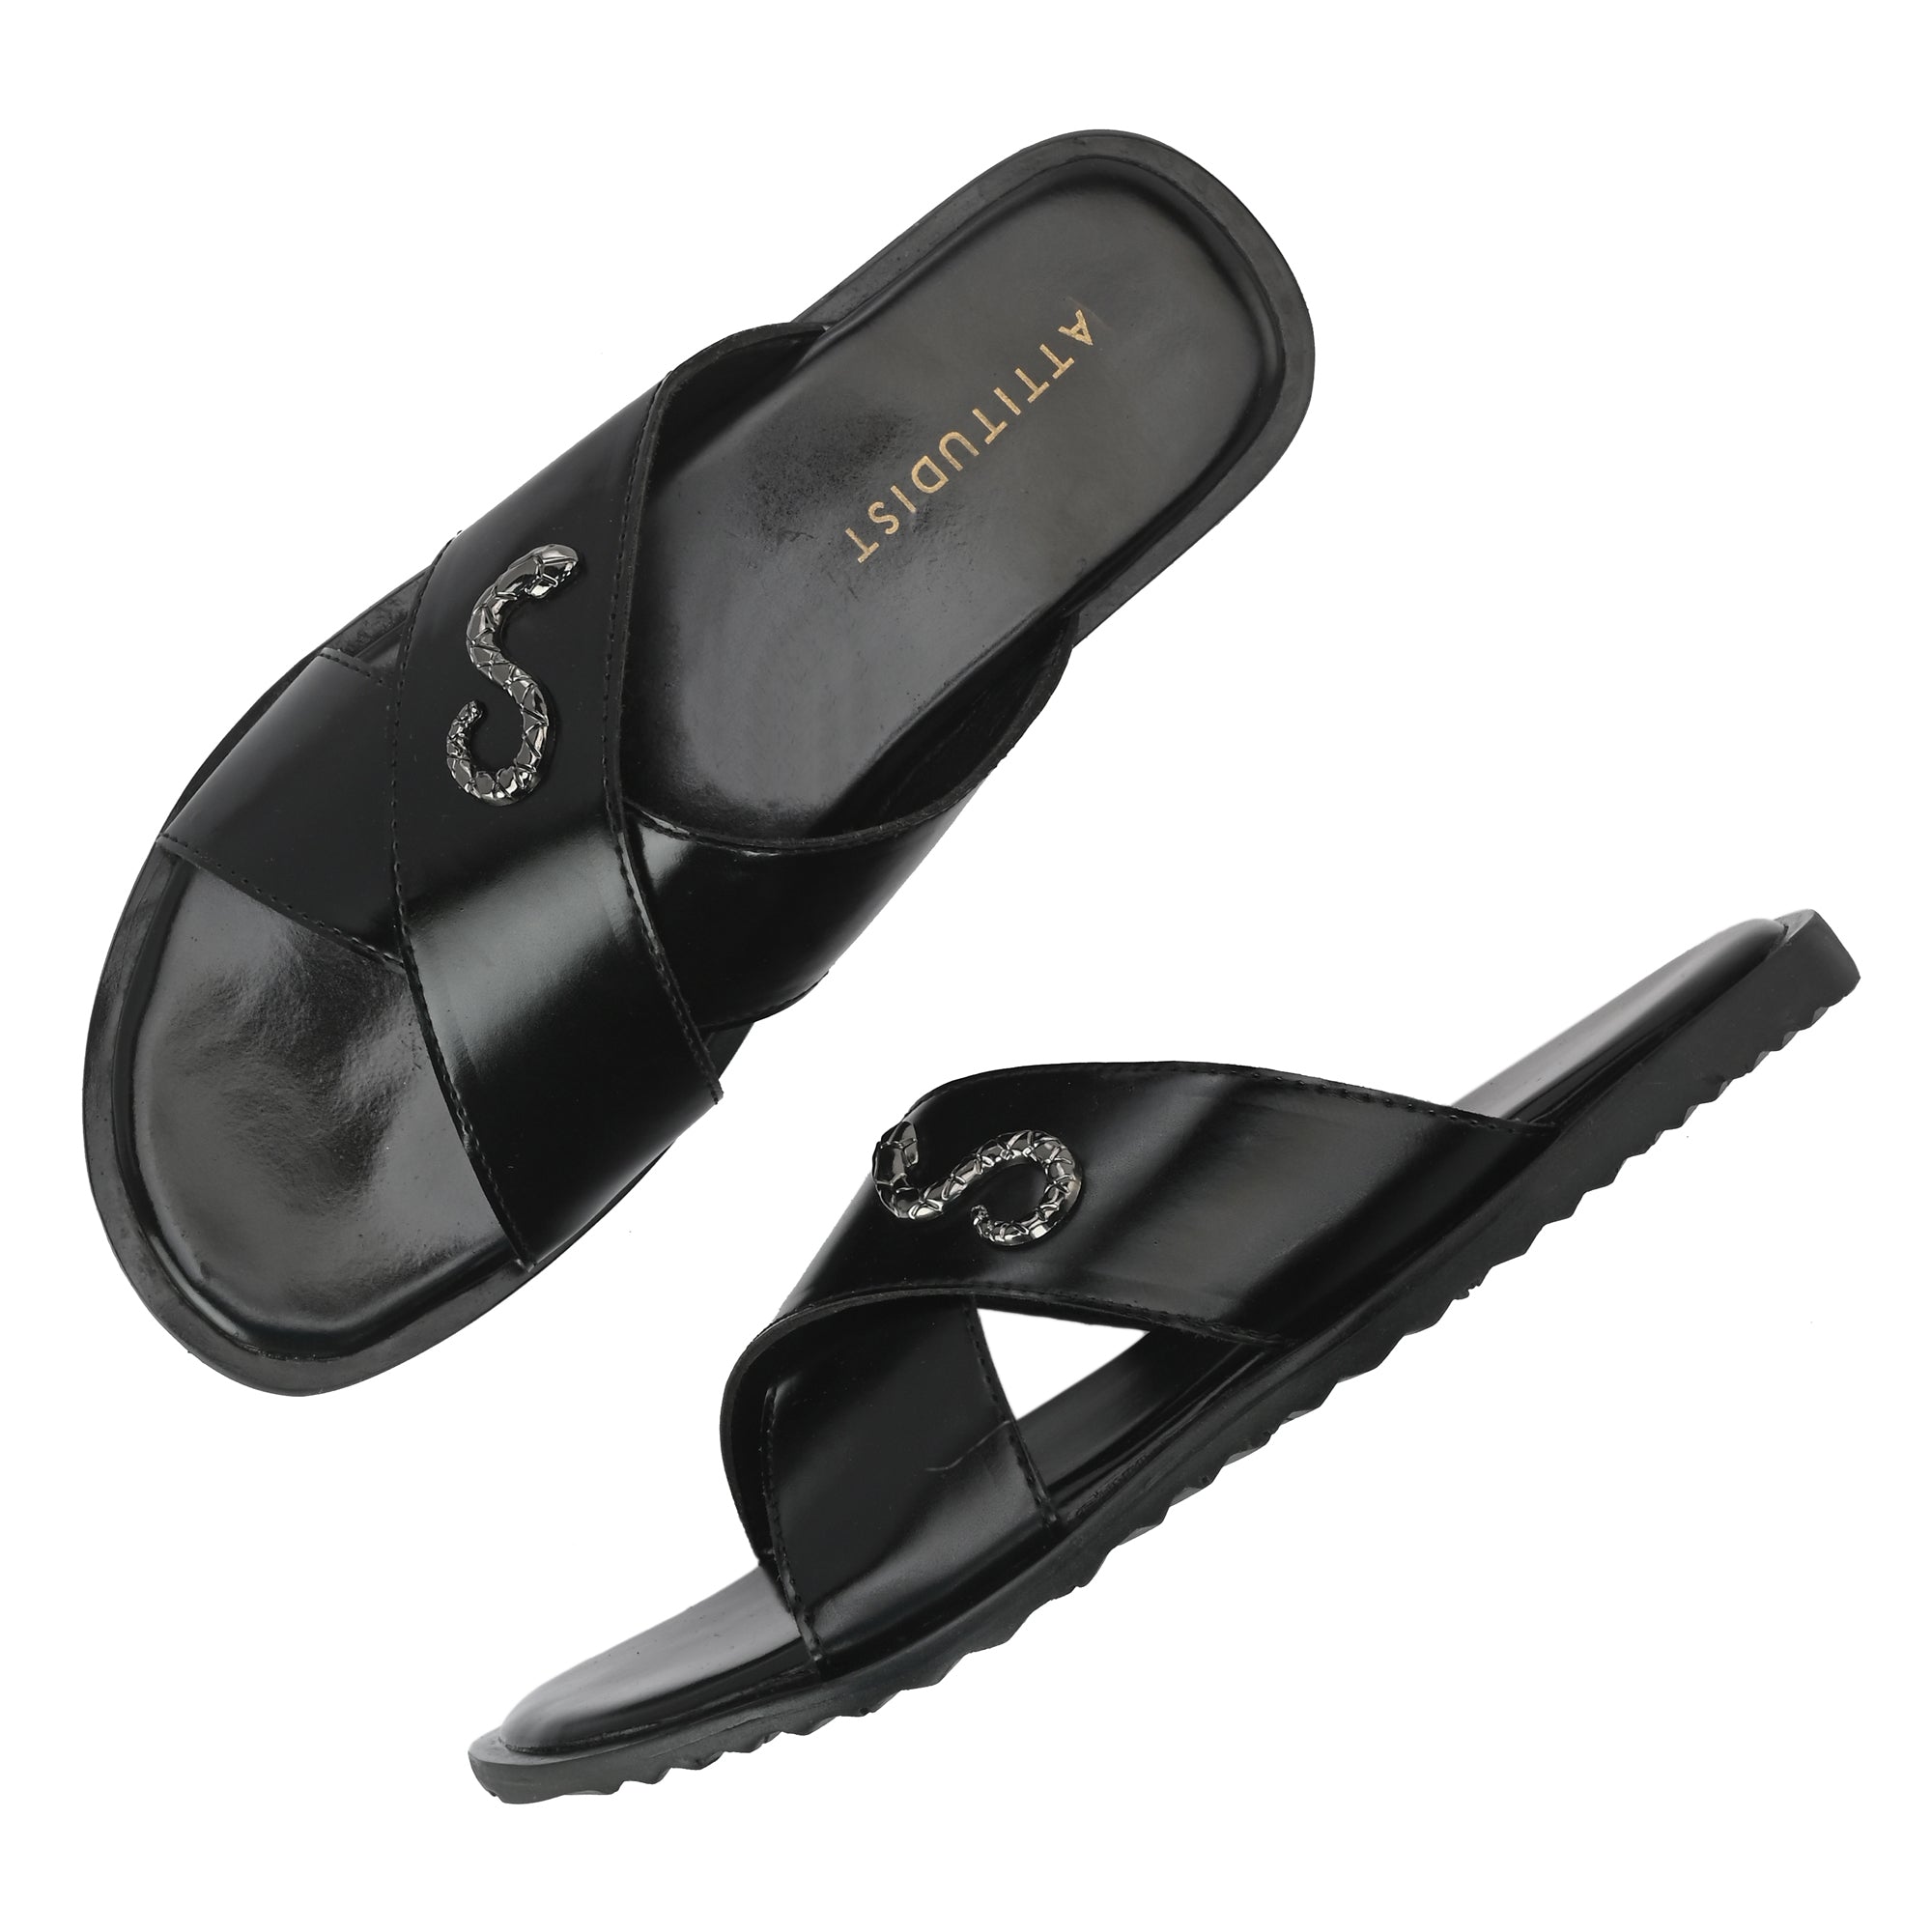 attitudist-black-cross-over-slippers-for-men-silver-side-brooch